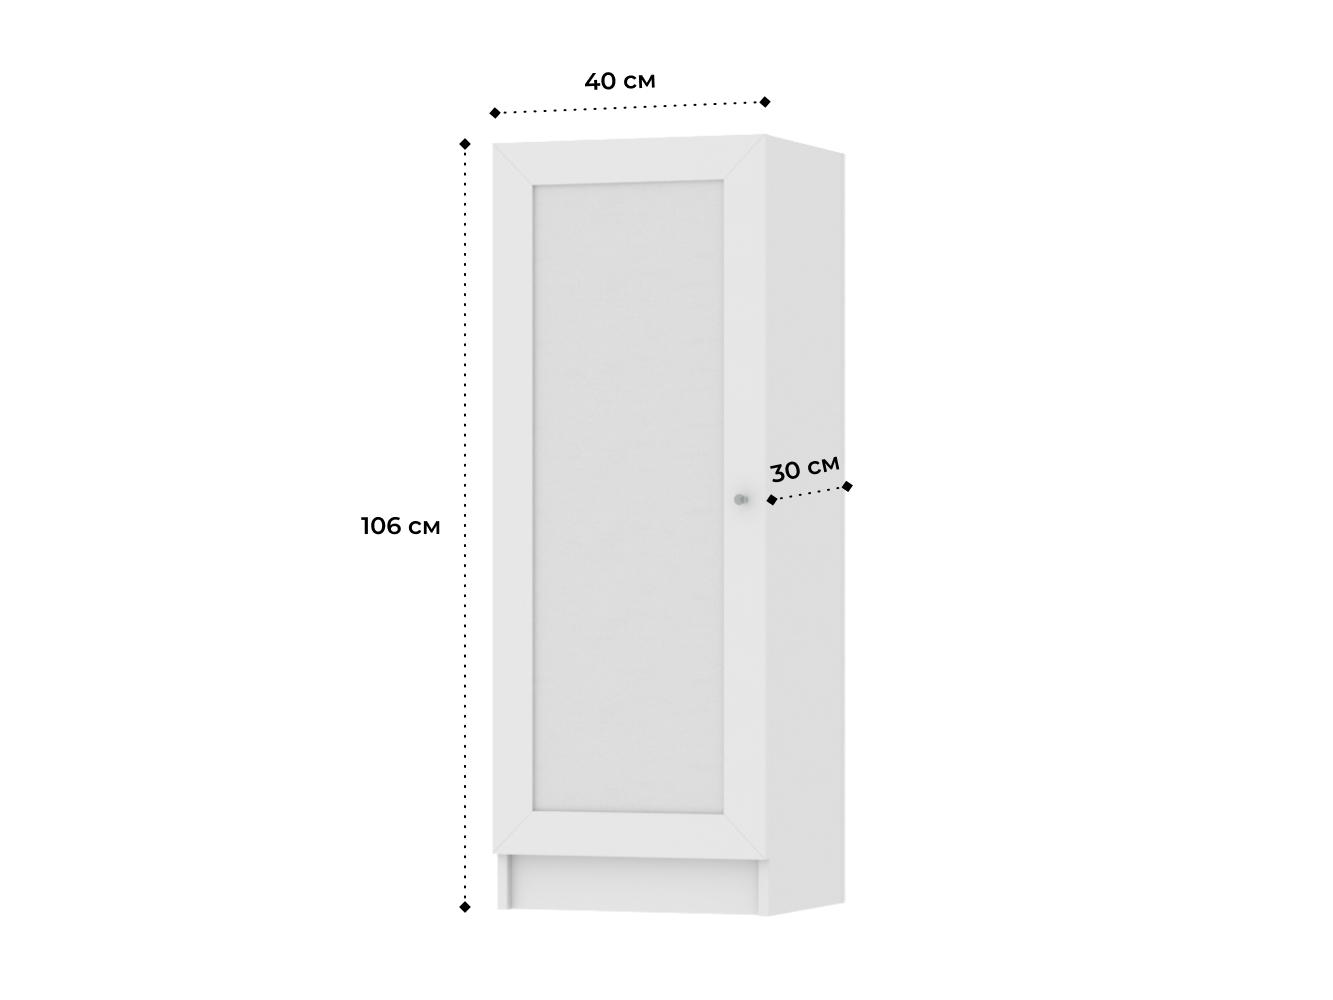 Изображение товара Стеллаж Билли 127 white ИКЕА (IKEA), 40x30x106 см на сайте adeta.ru